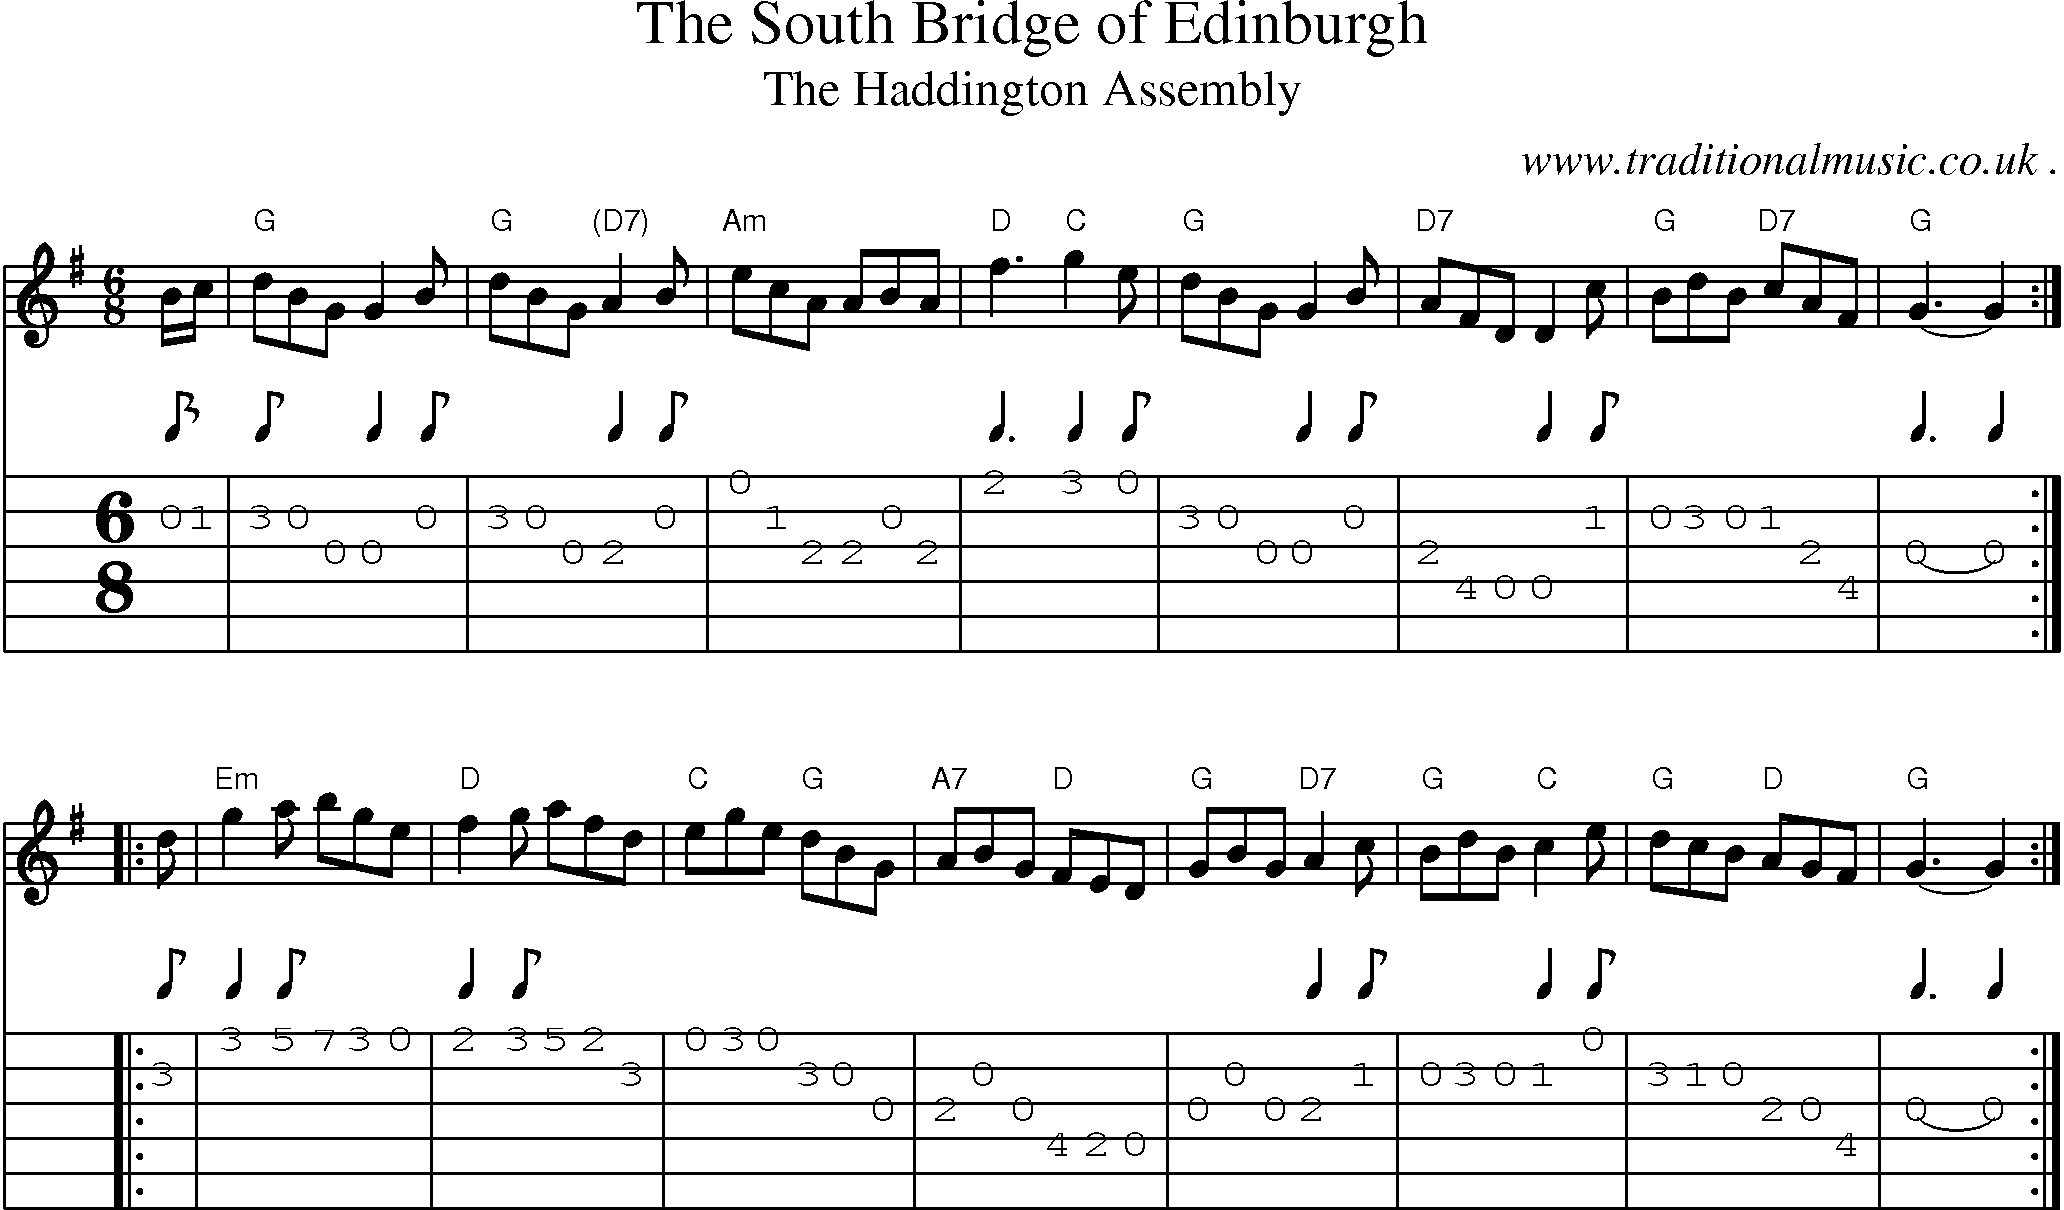 Sheet-music  score, Chords and Guitar Tabs for The South Bridge Of Edinburgh